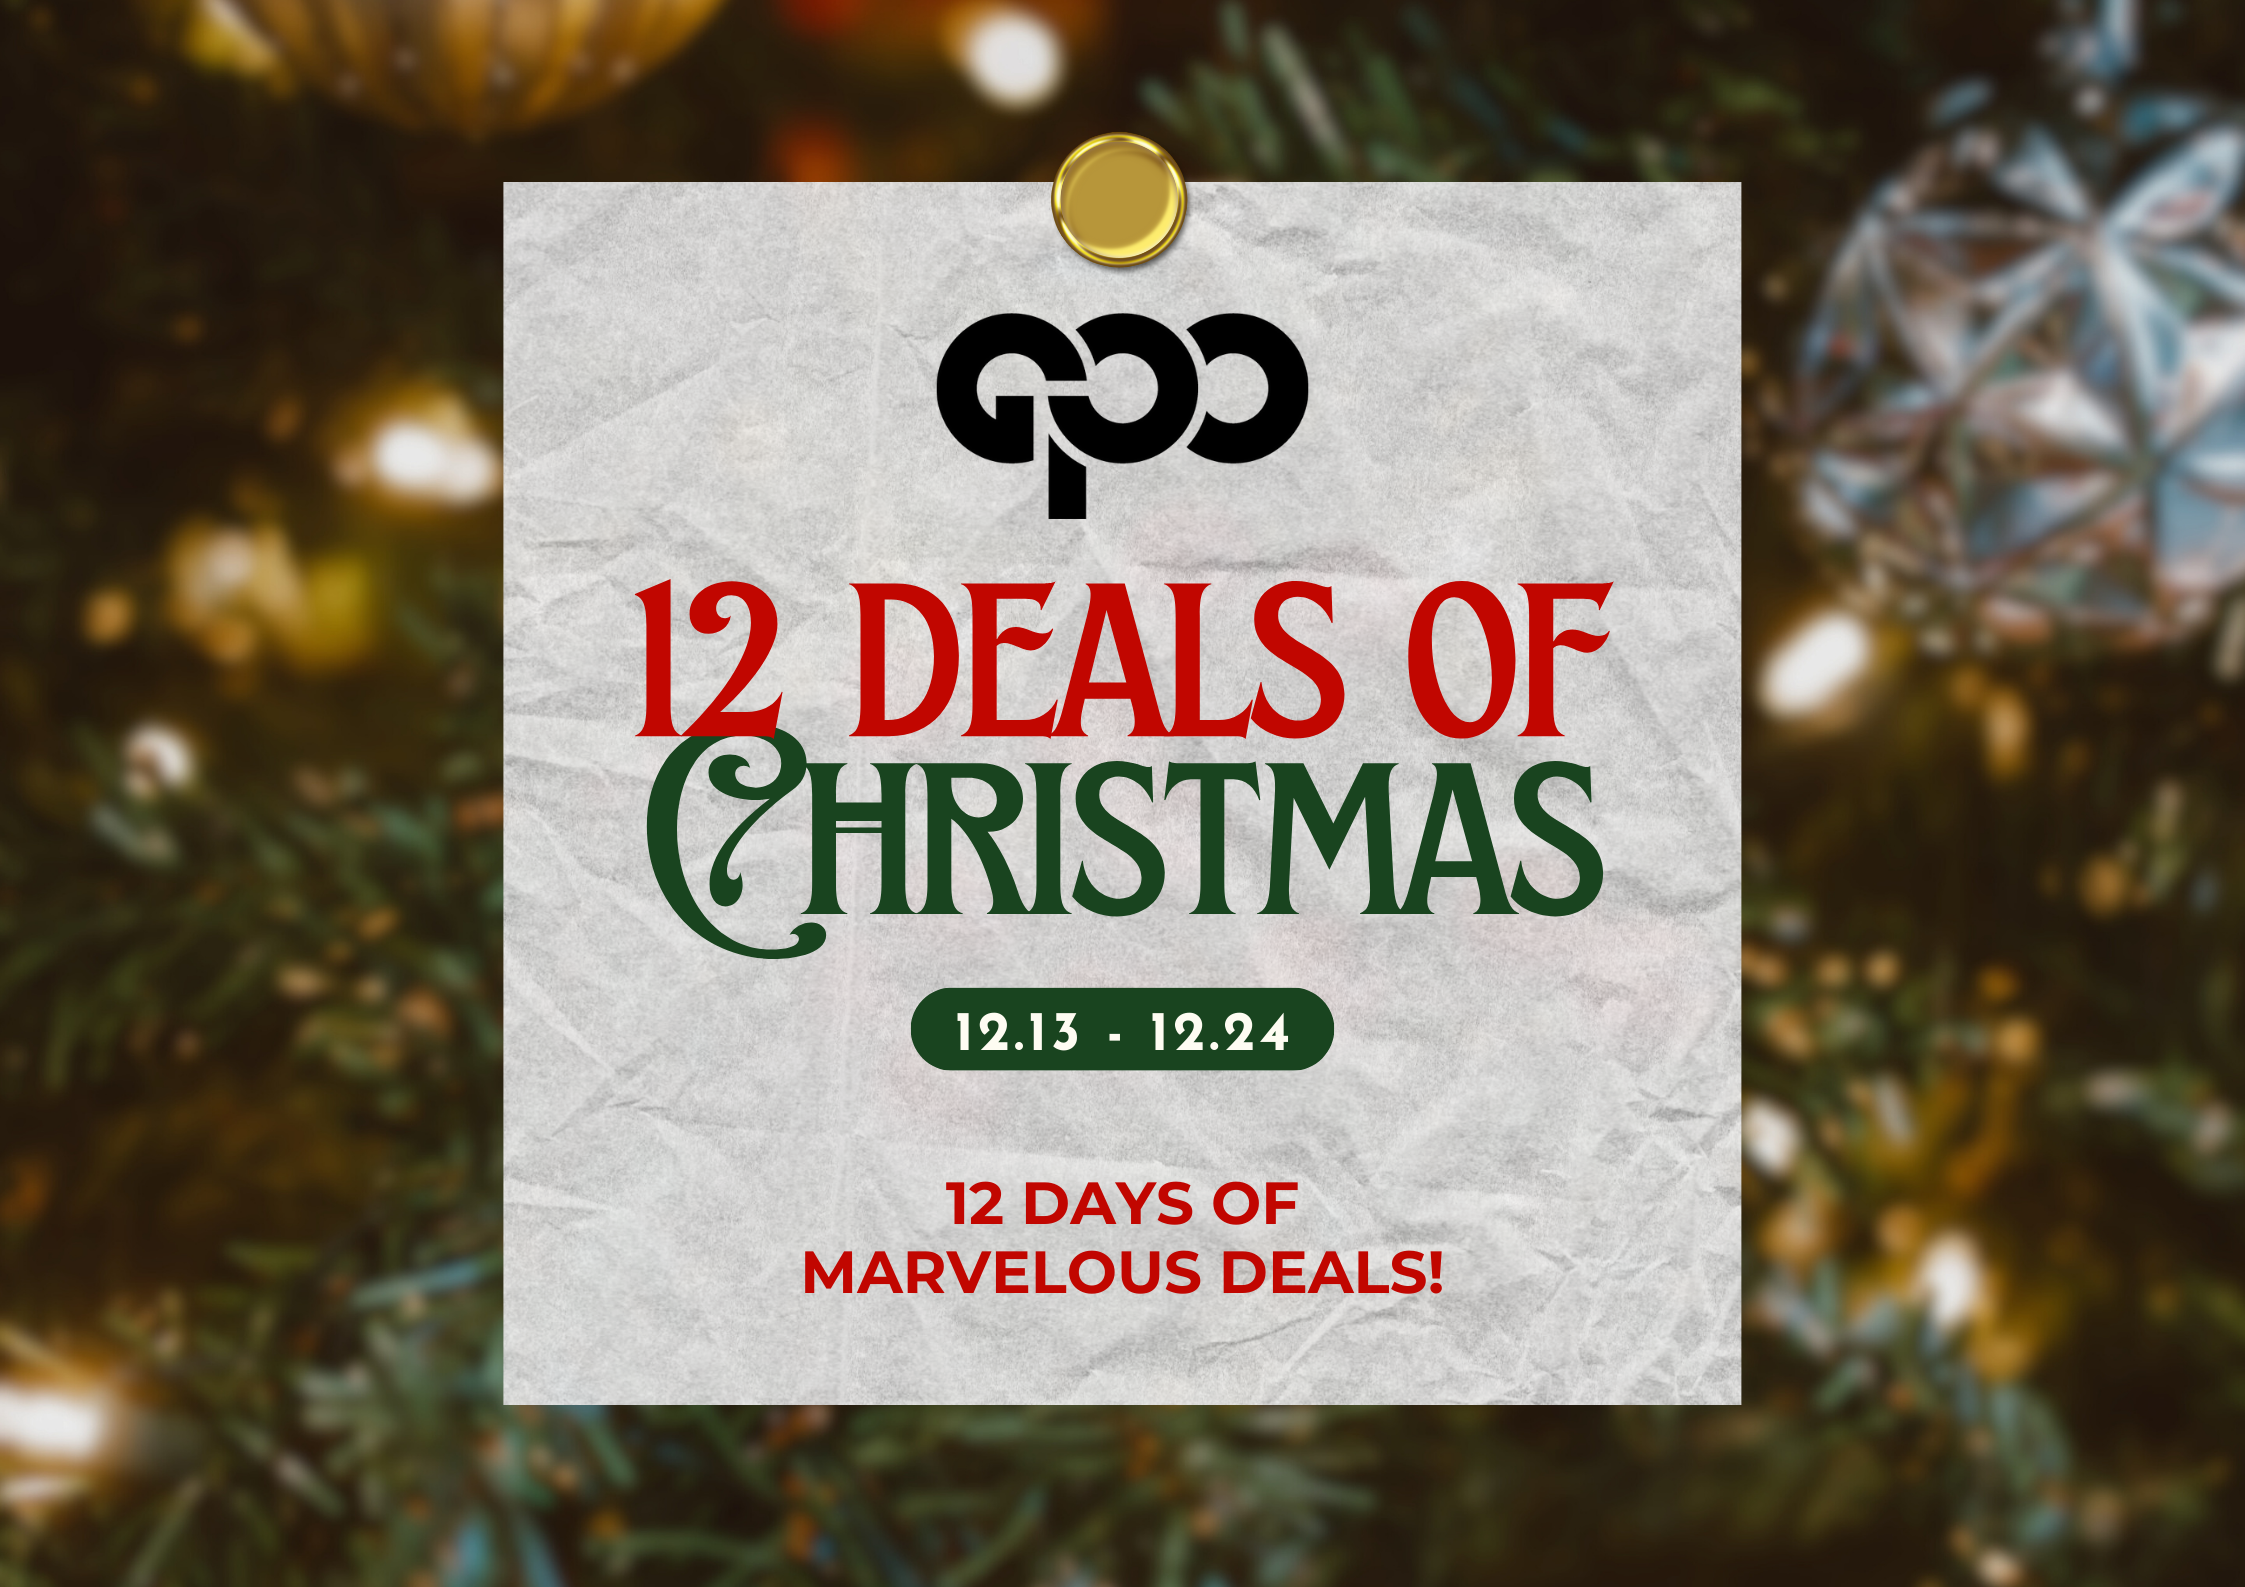 12 Deals of Christmas (December 19): Steve Madden